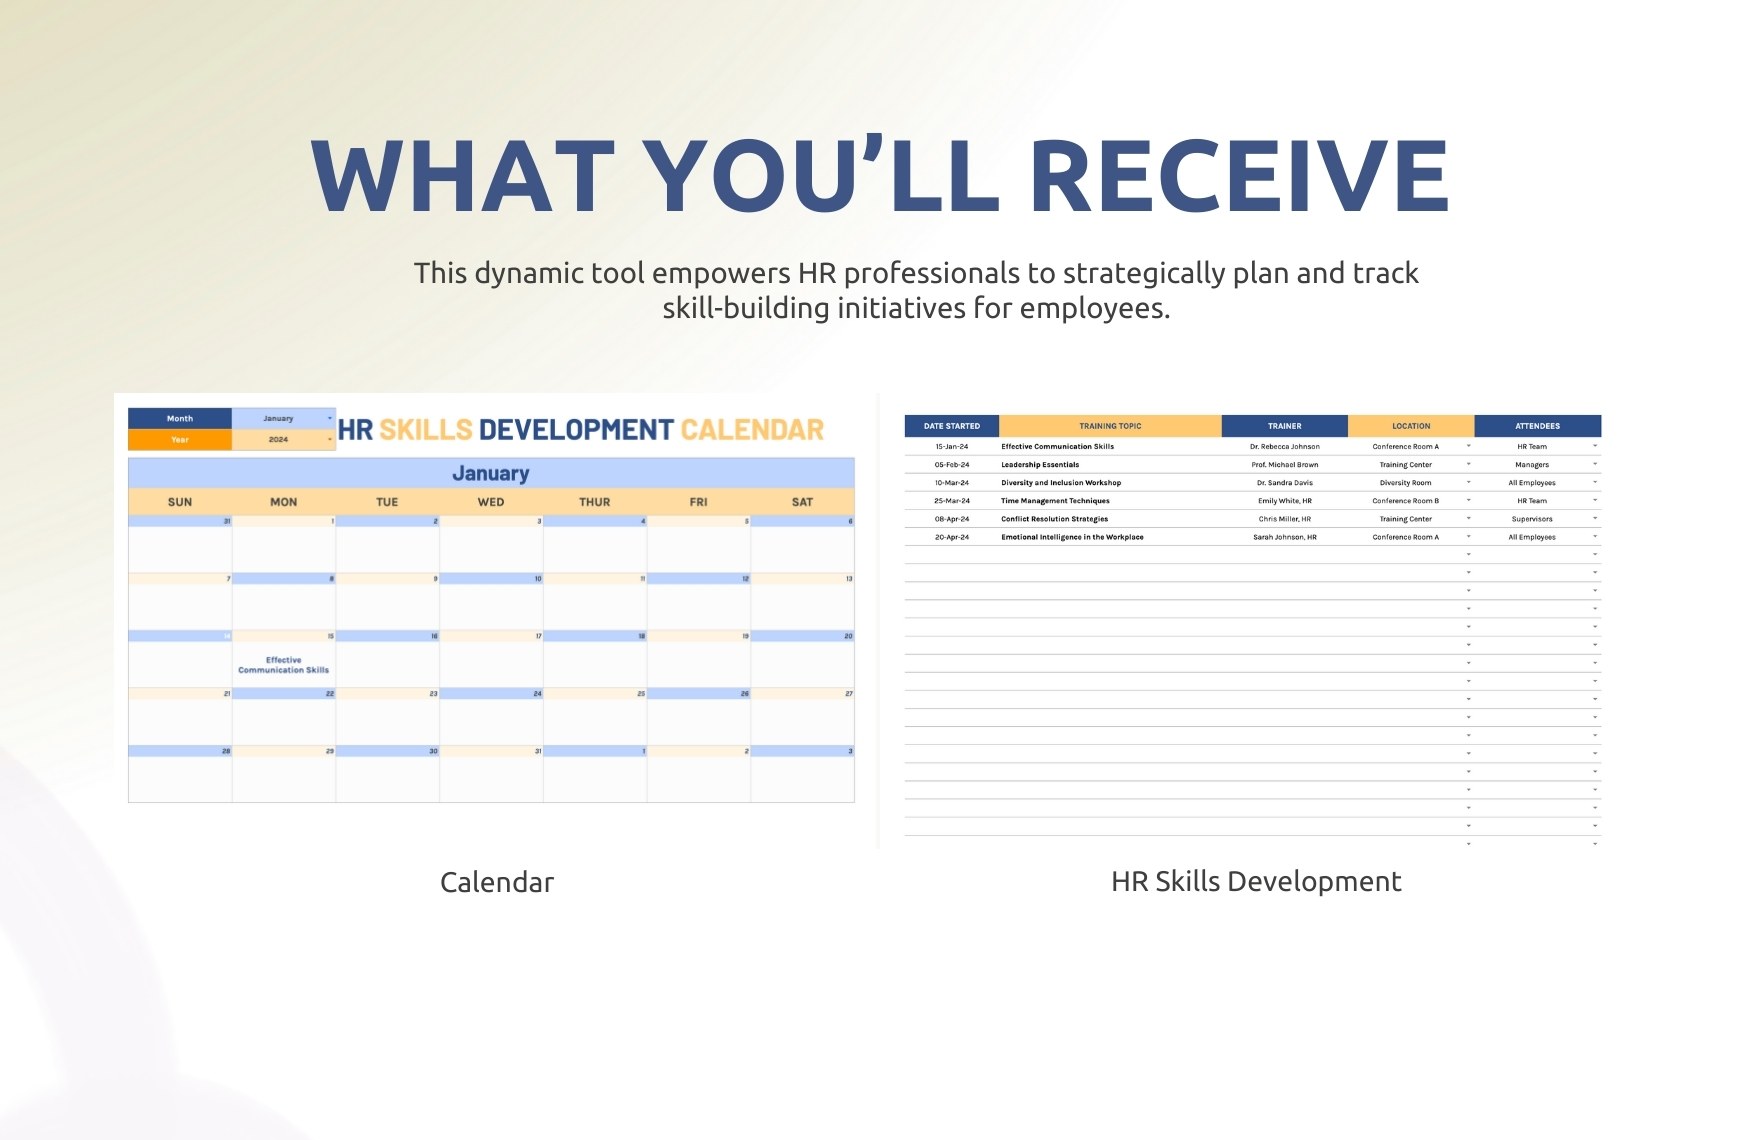 HR Skills Development Calendar Template